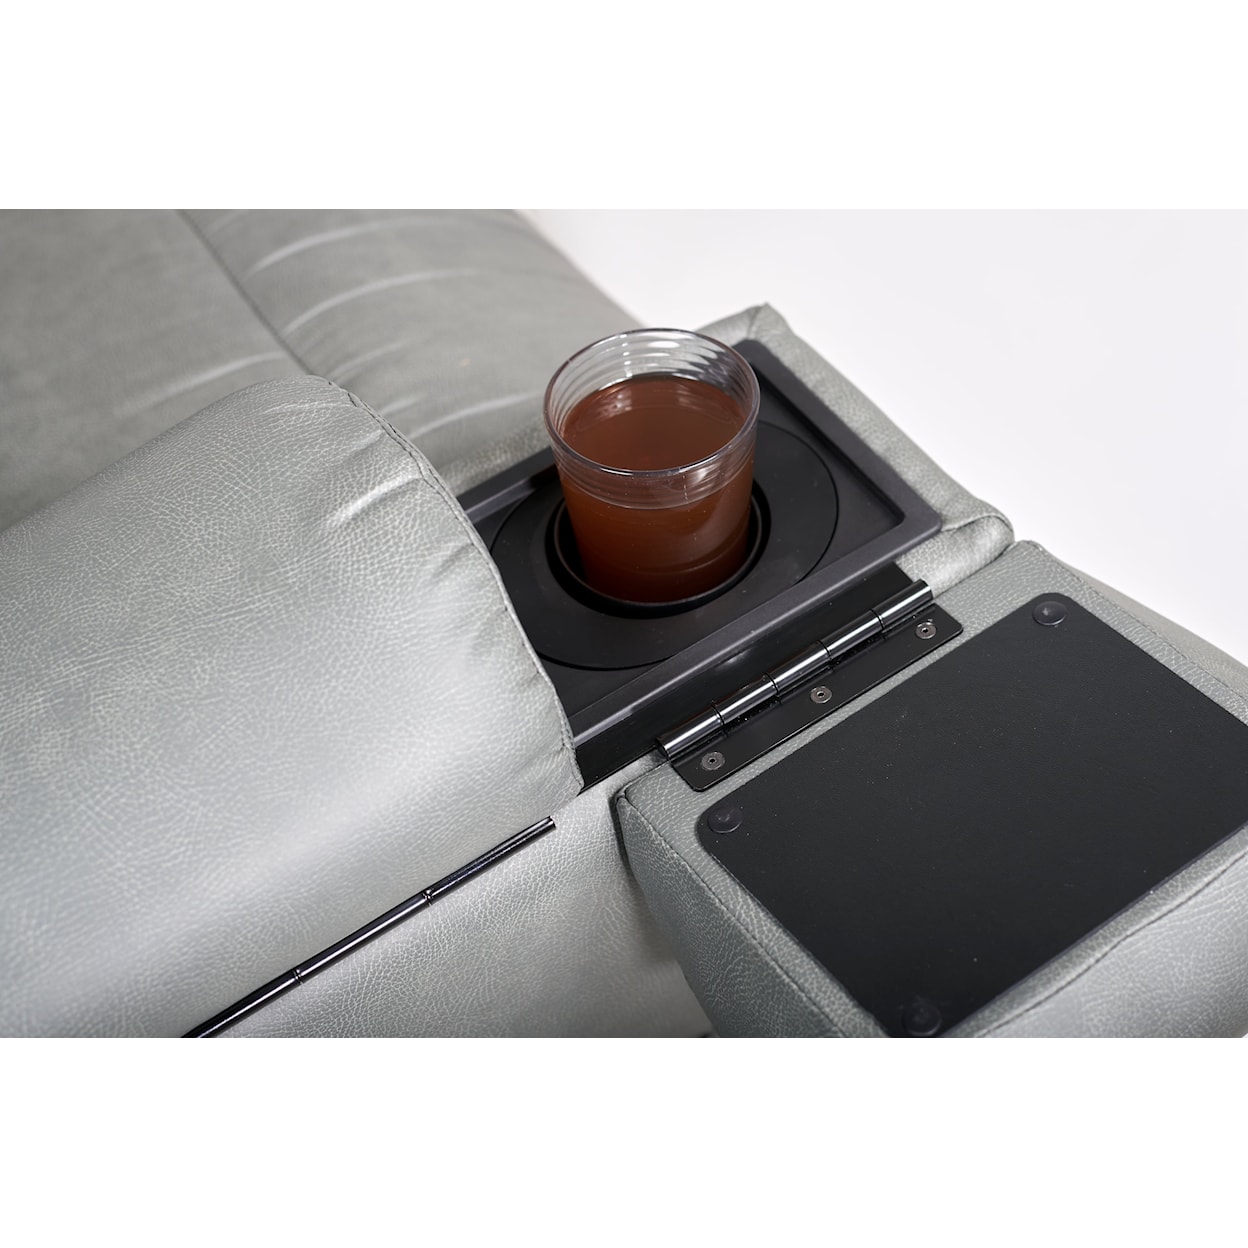 UltraComfort Rigel Lift Chair w/ Pwr Hdrst, Lumbar, & HeatWave